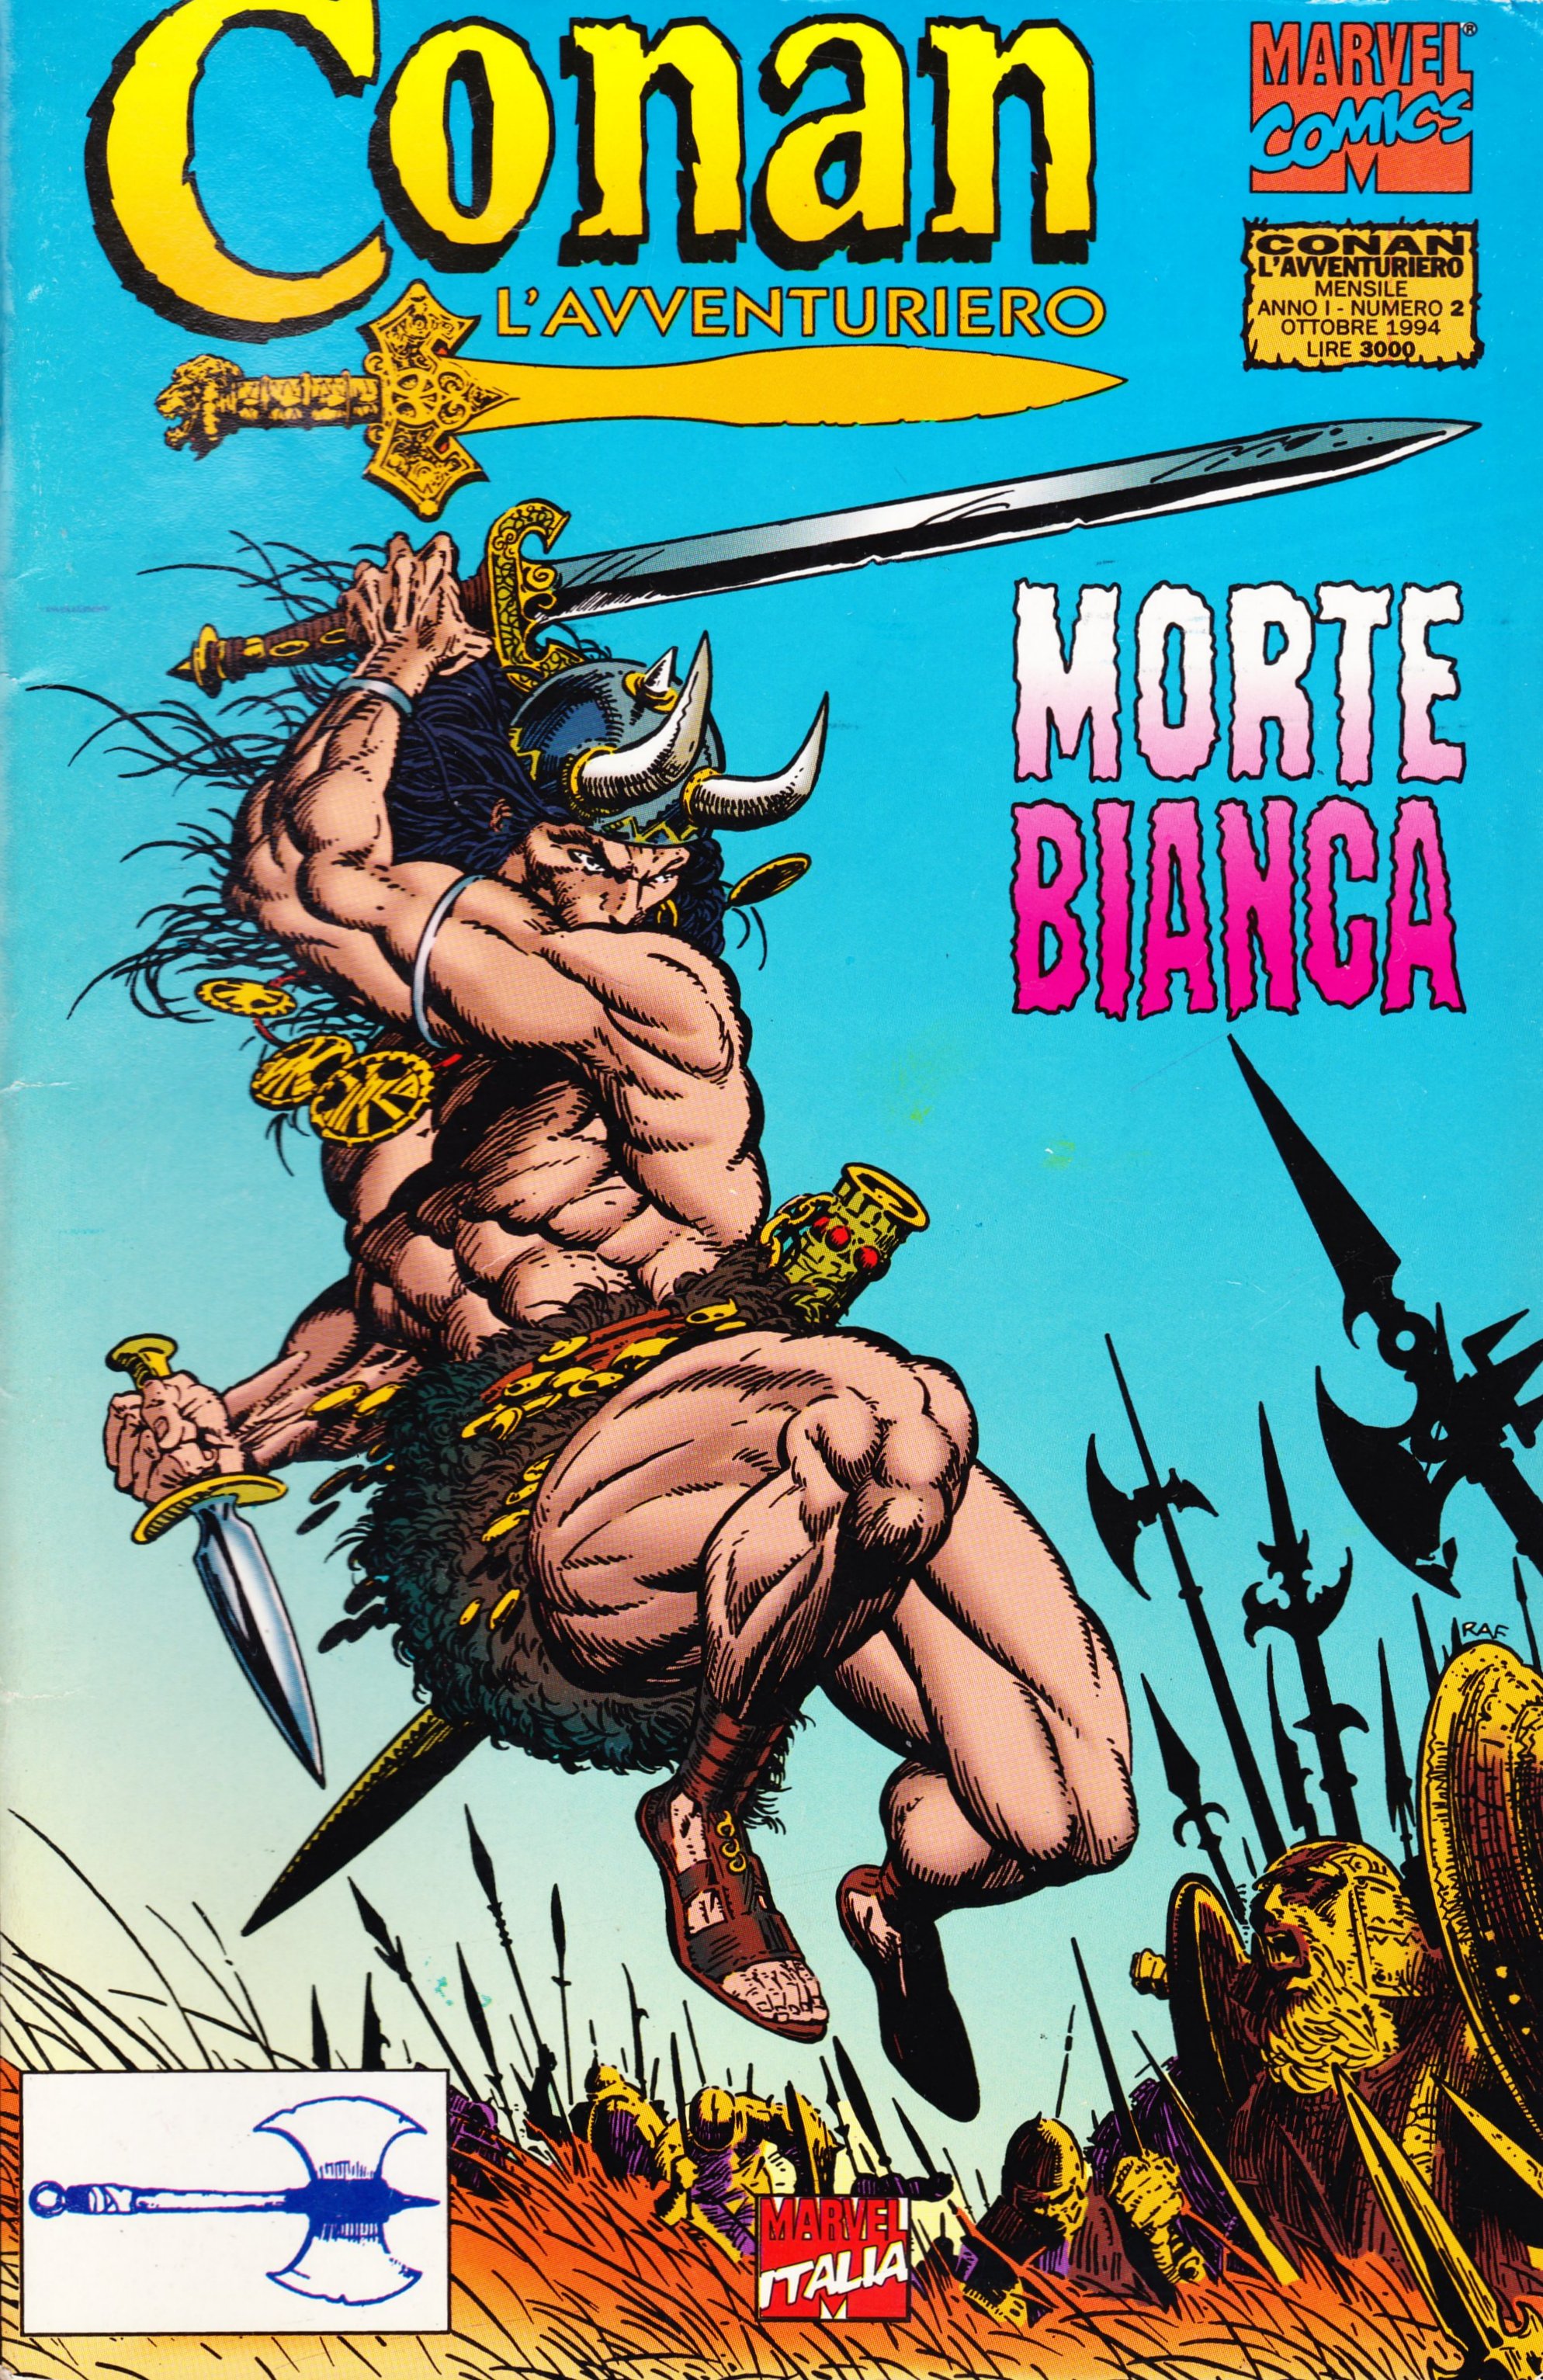 Conan l'avventuriero n. 2 - Morte Bianca